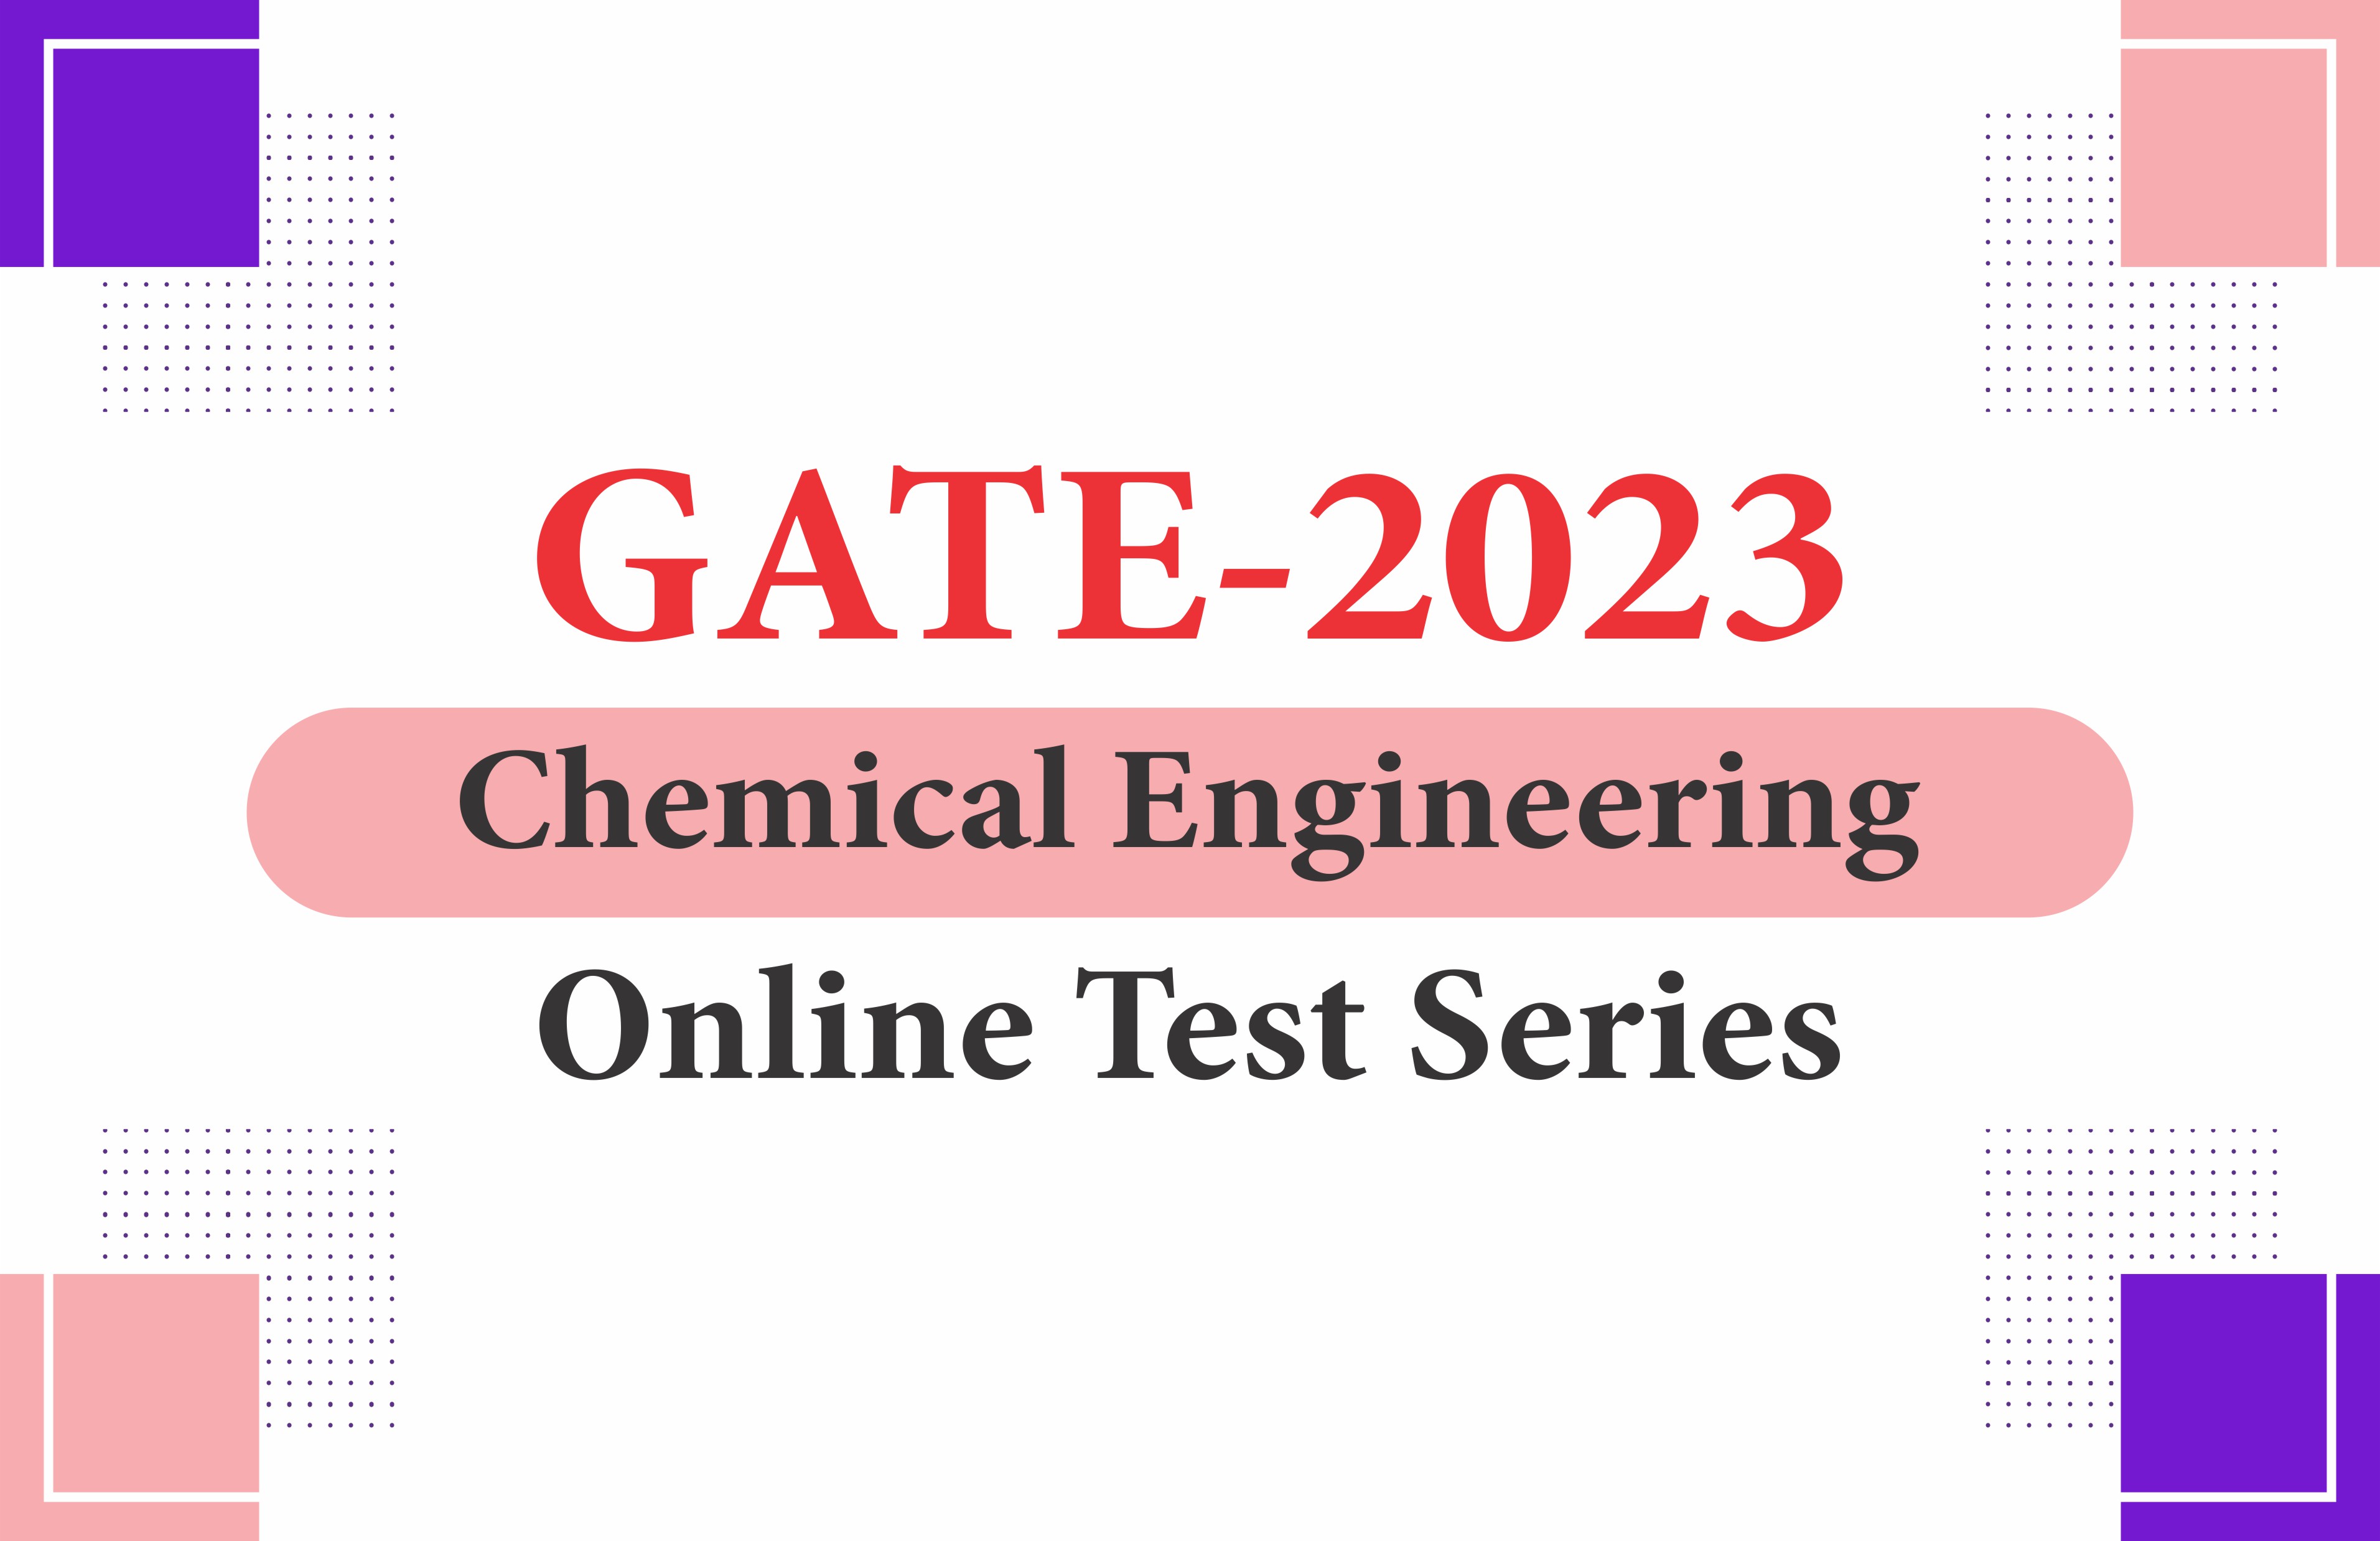 GATE -2023 Chemical Engineering Online Test Series